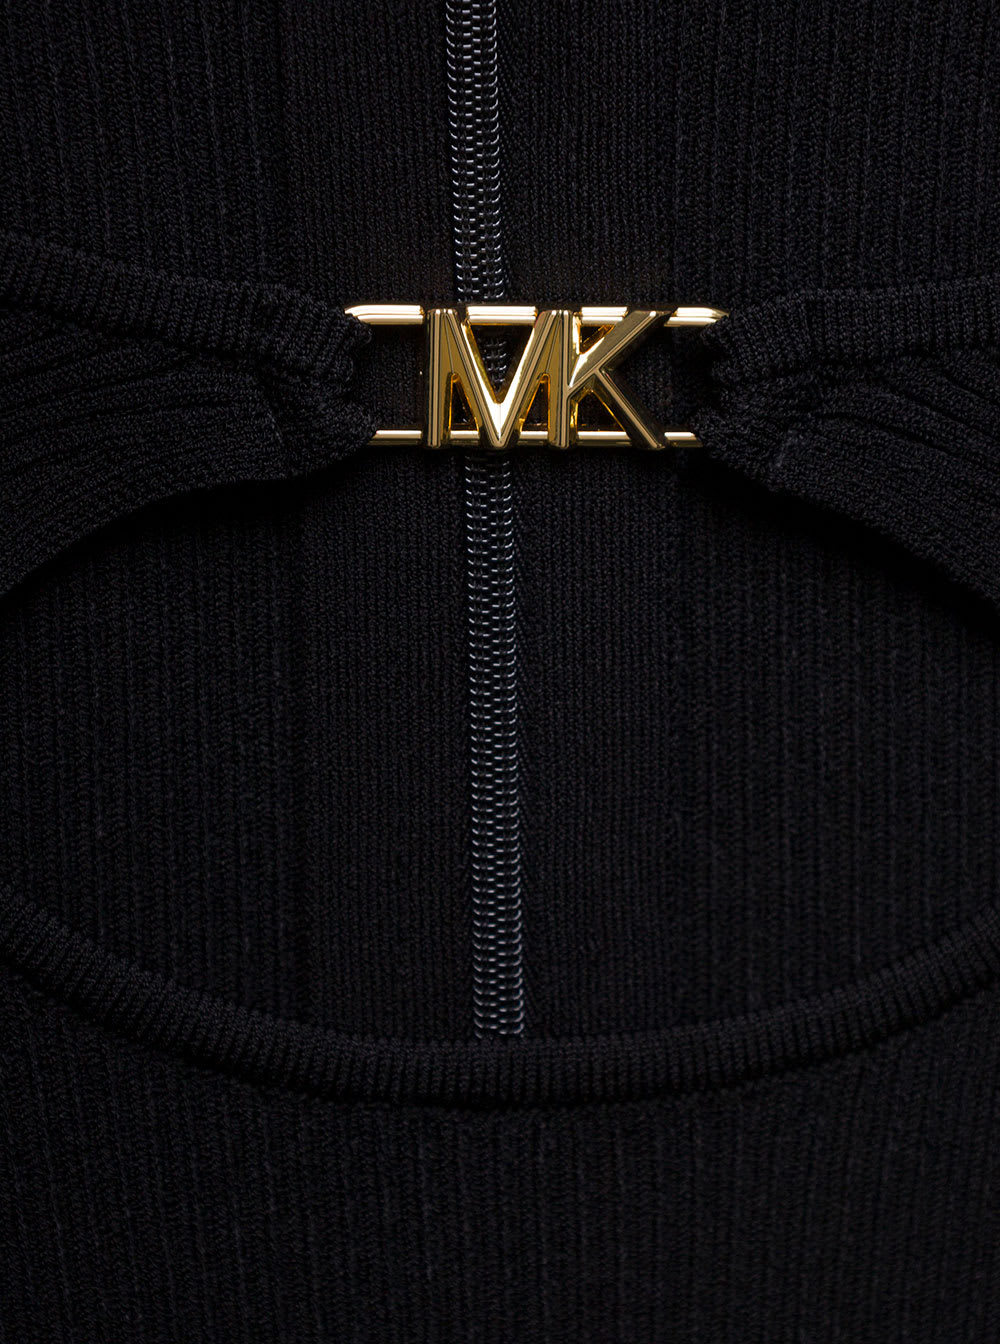 Shop Michael Kors Empire Hw Cutout Rib Dress In Black